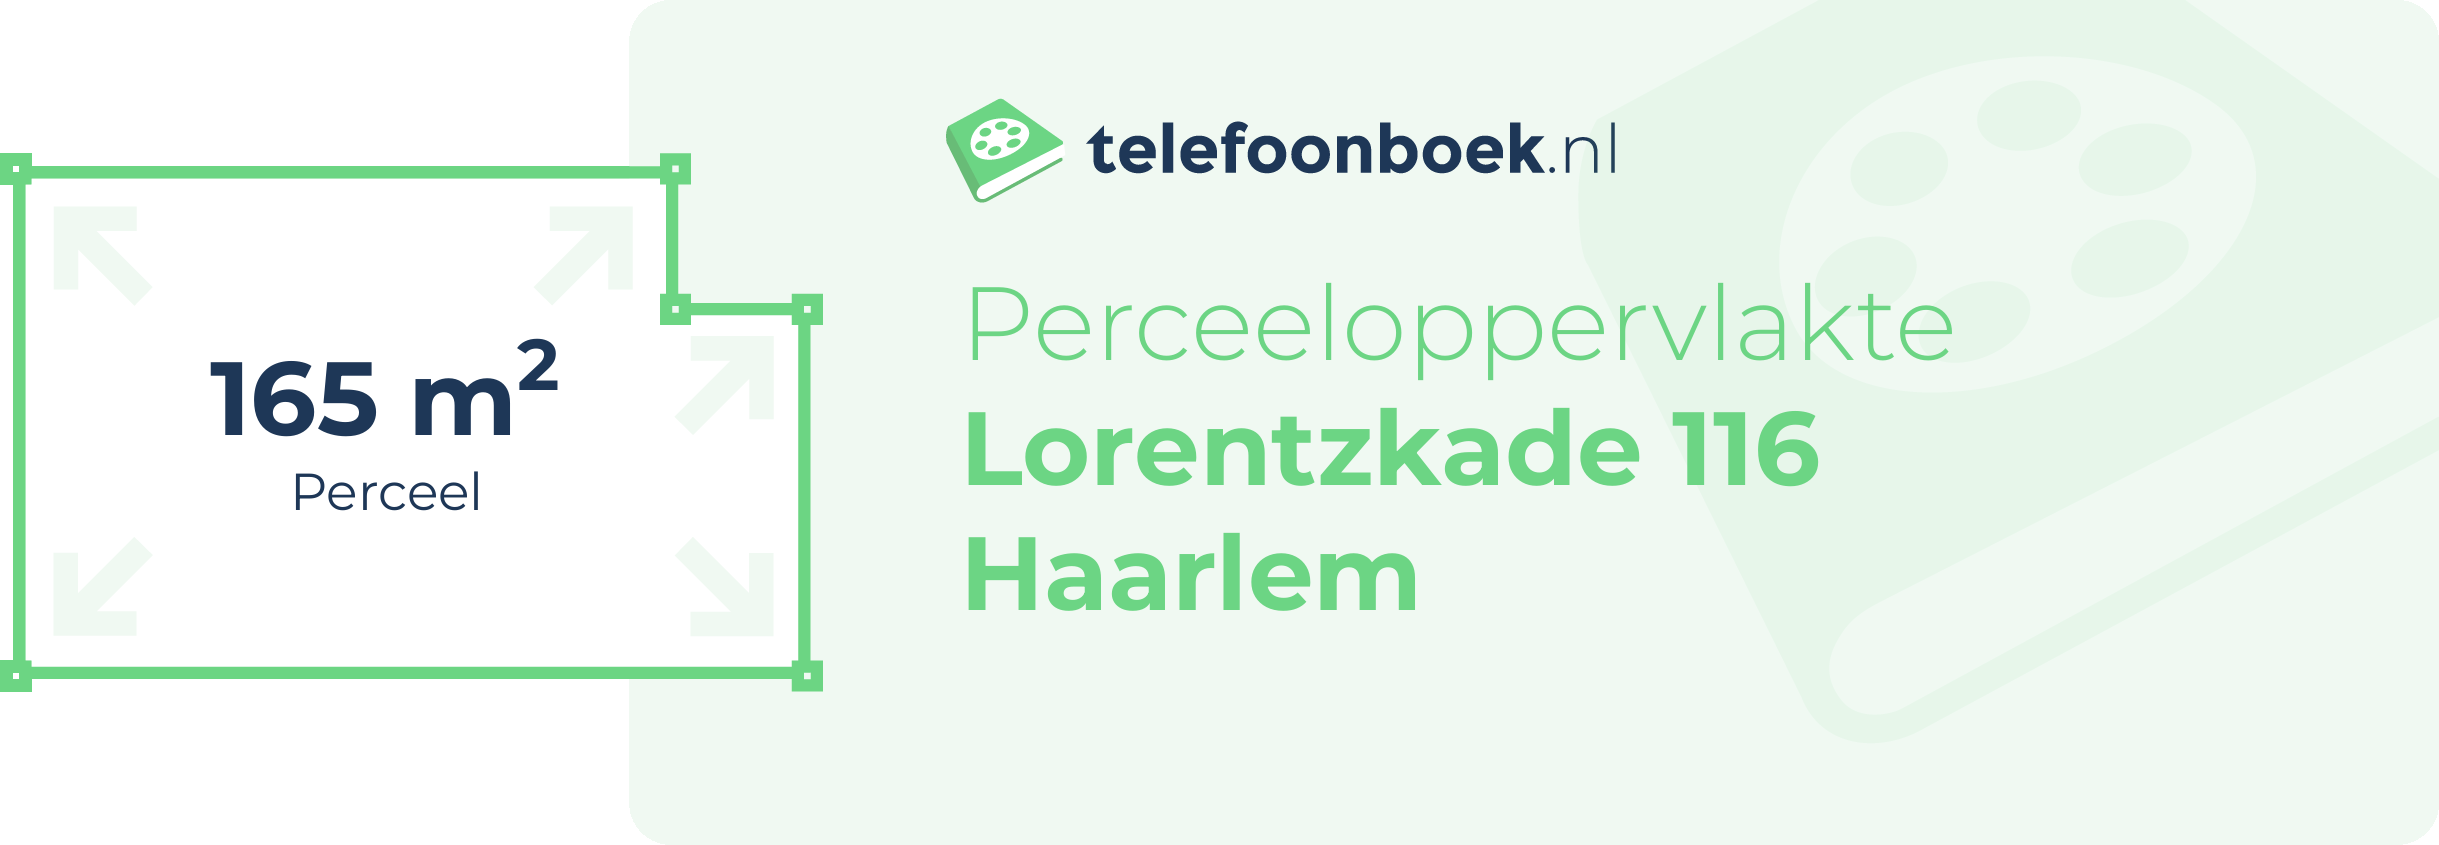 Perceeloppervlakte Lorentzkade 116 Haarlem